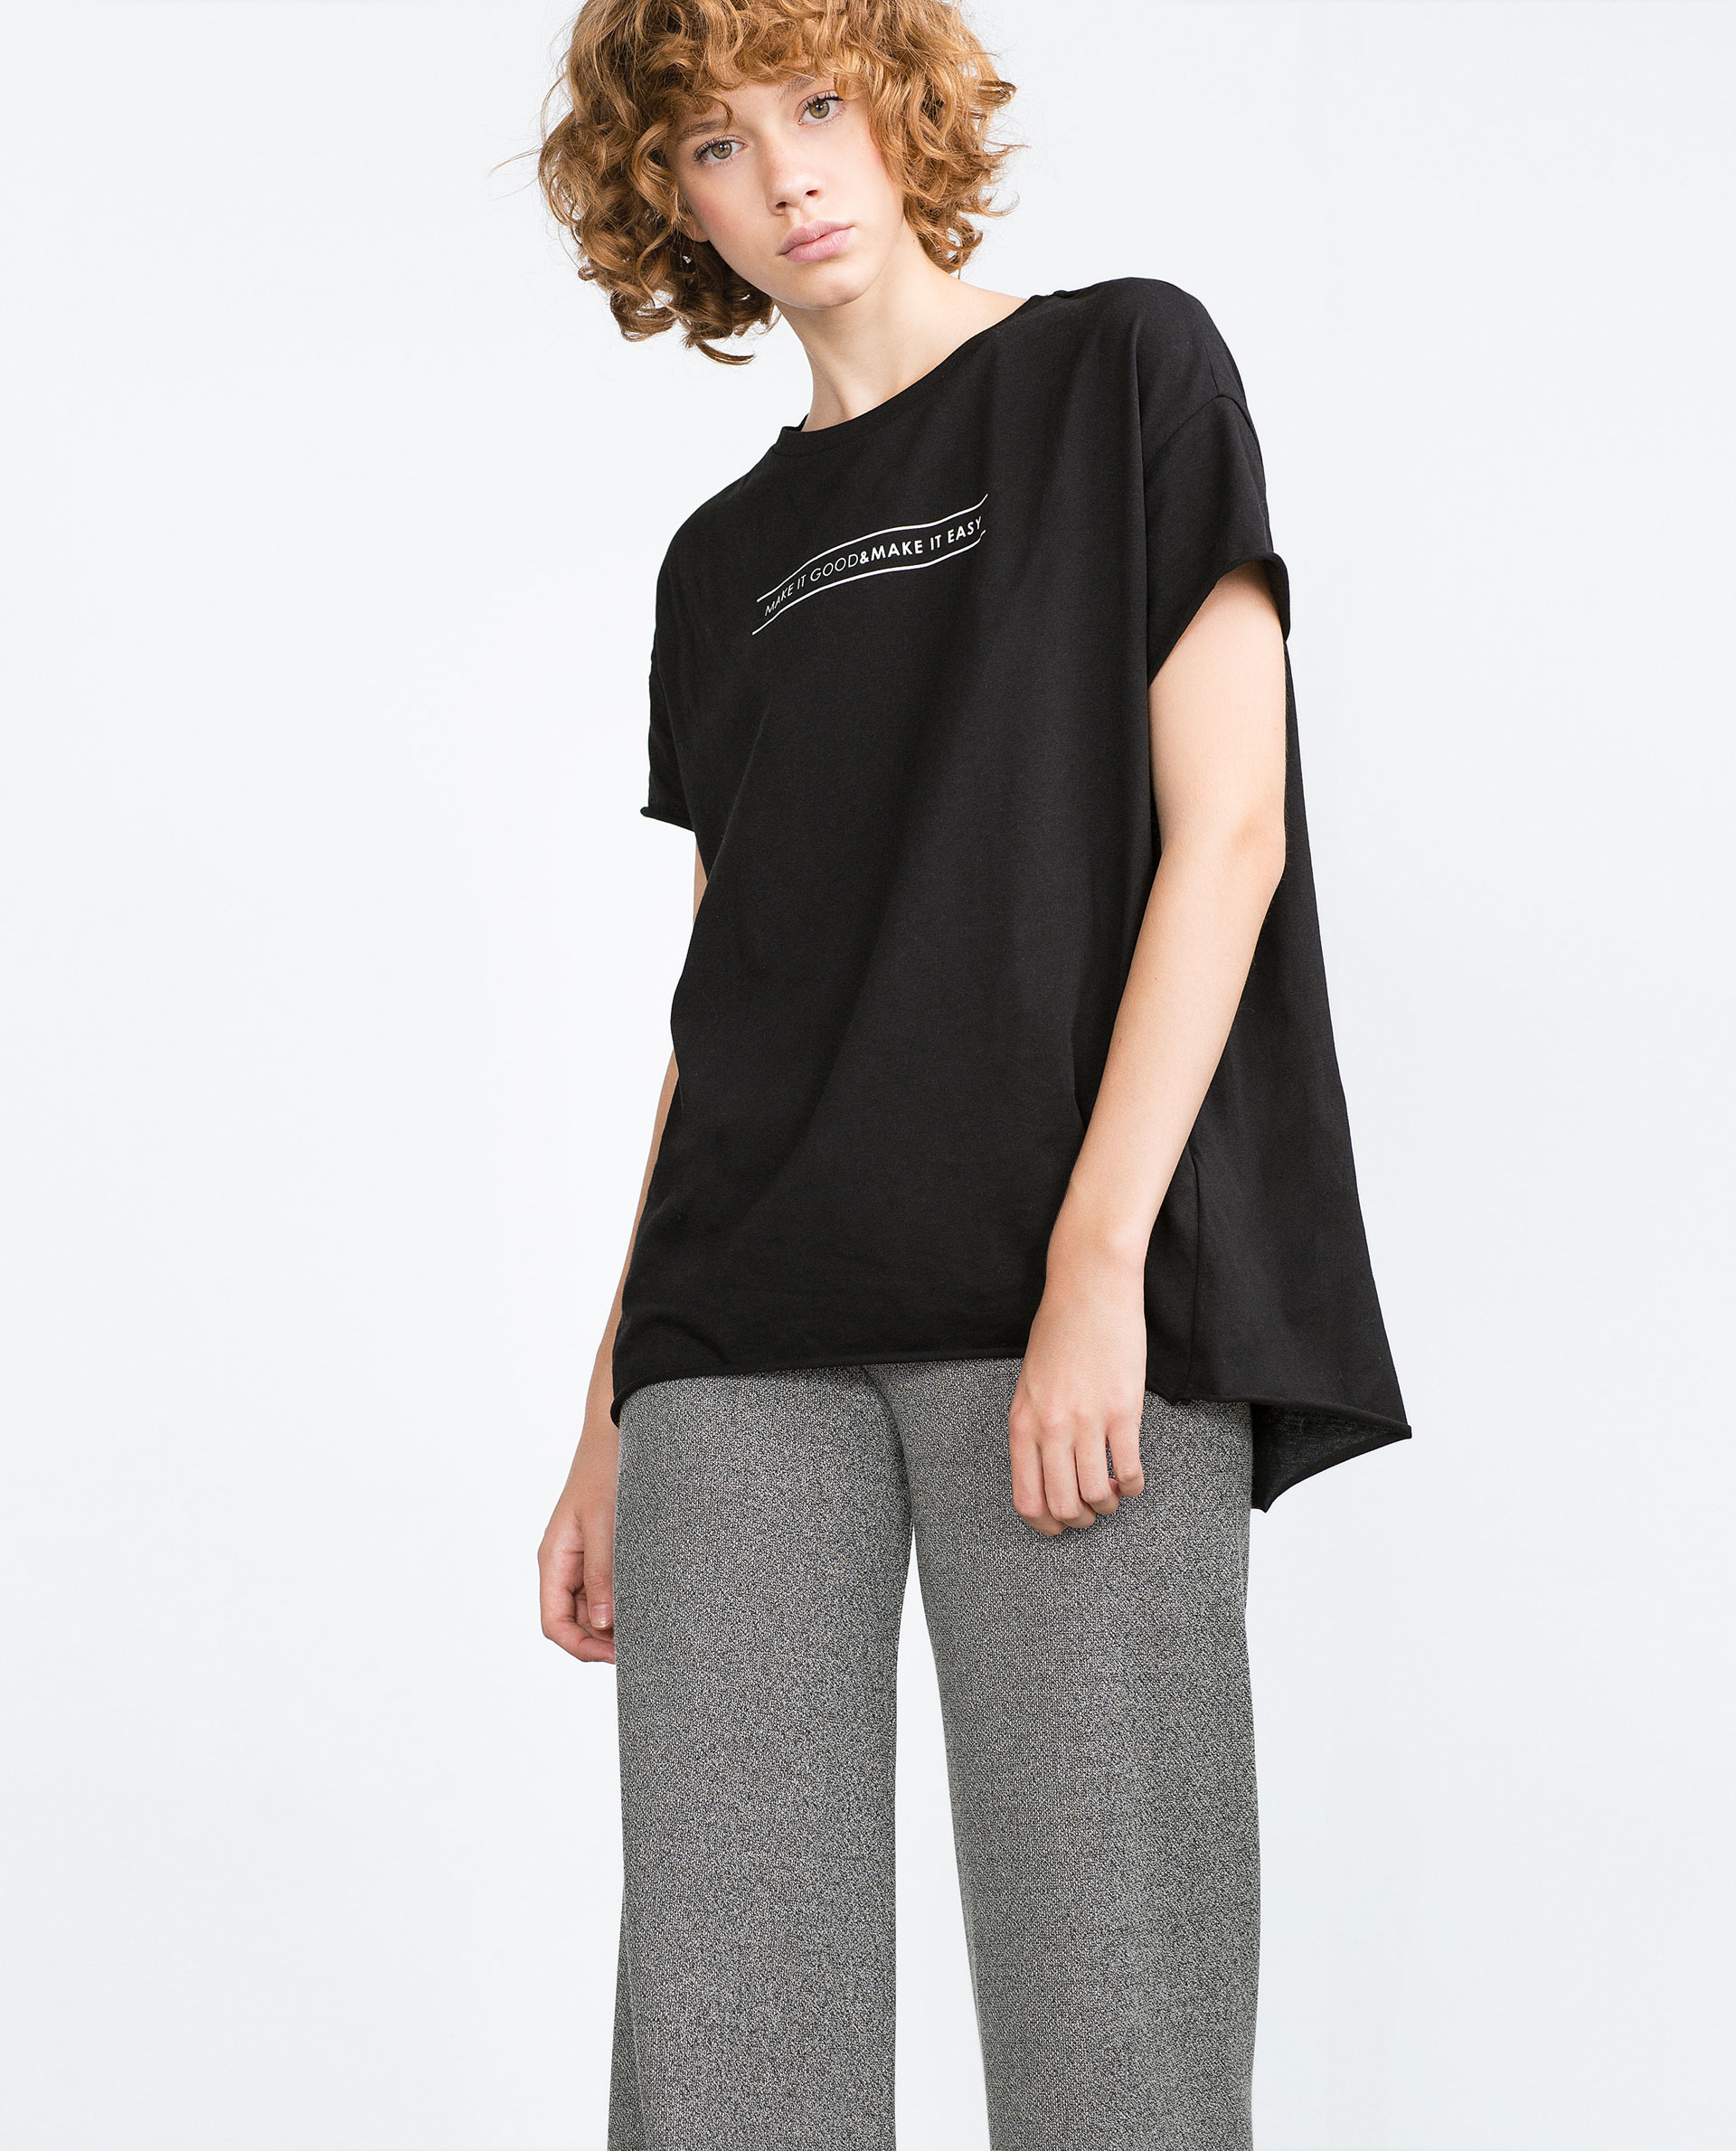 Zara Oversize Text T-shirt in Black (Black / White) | Lyst